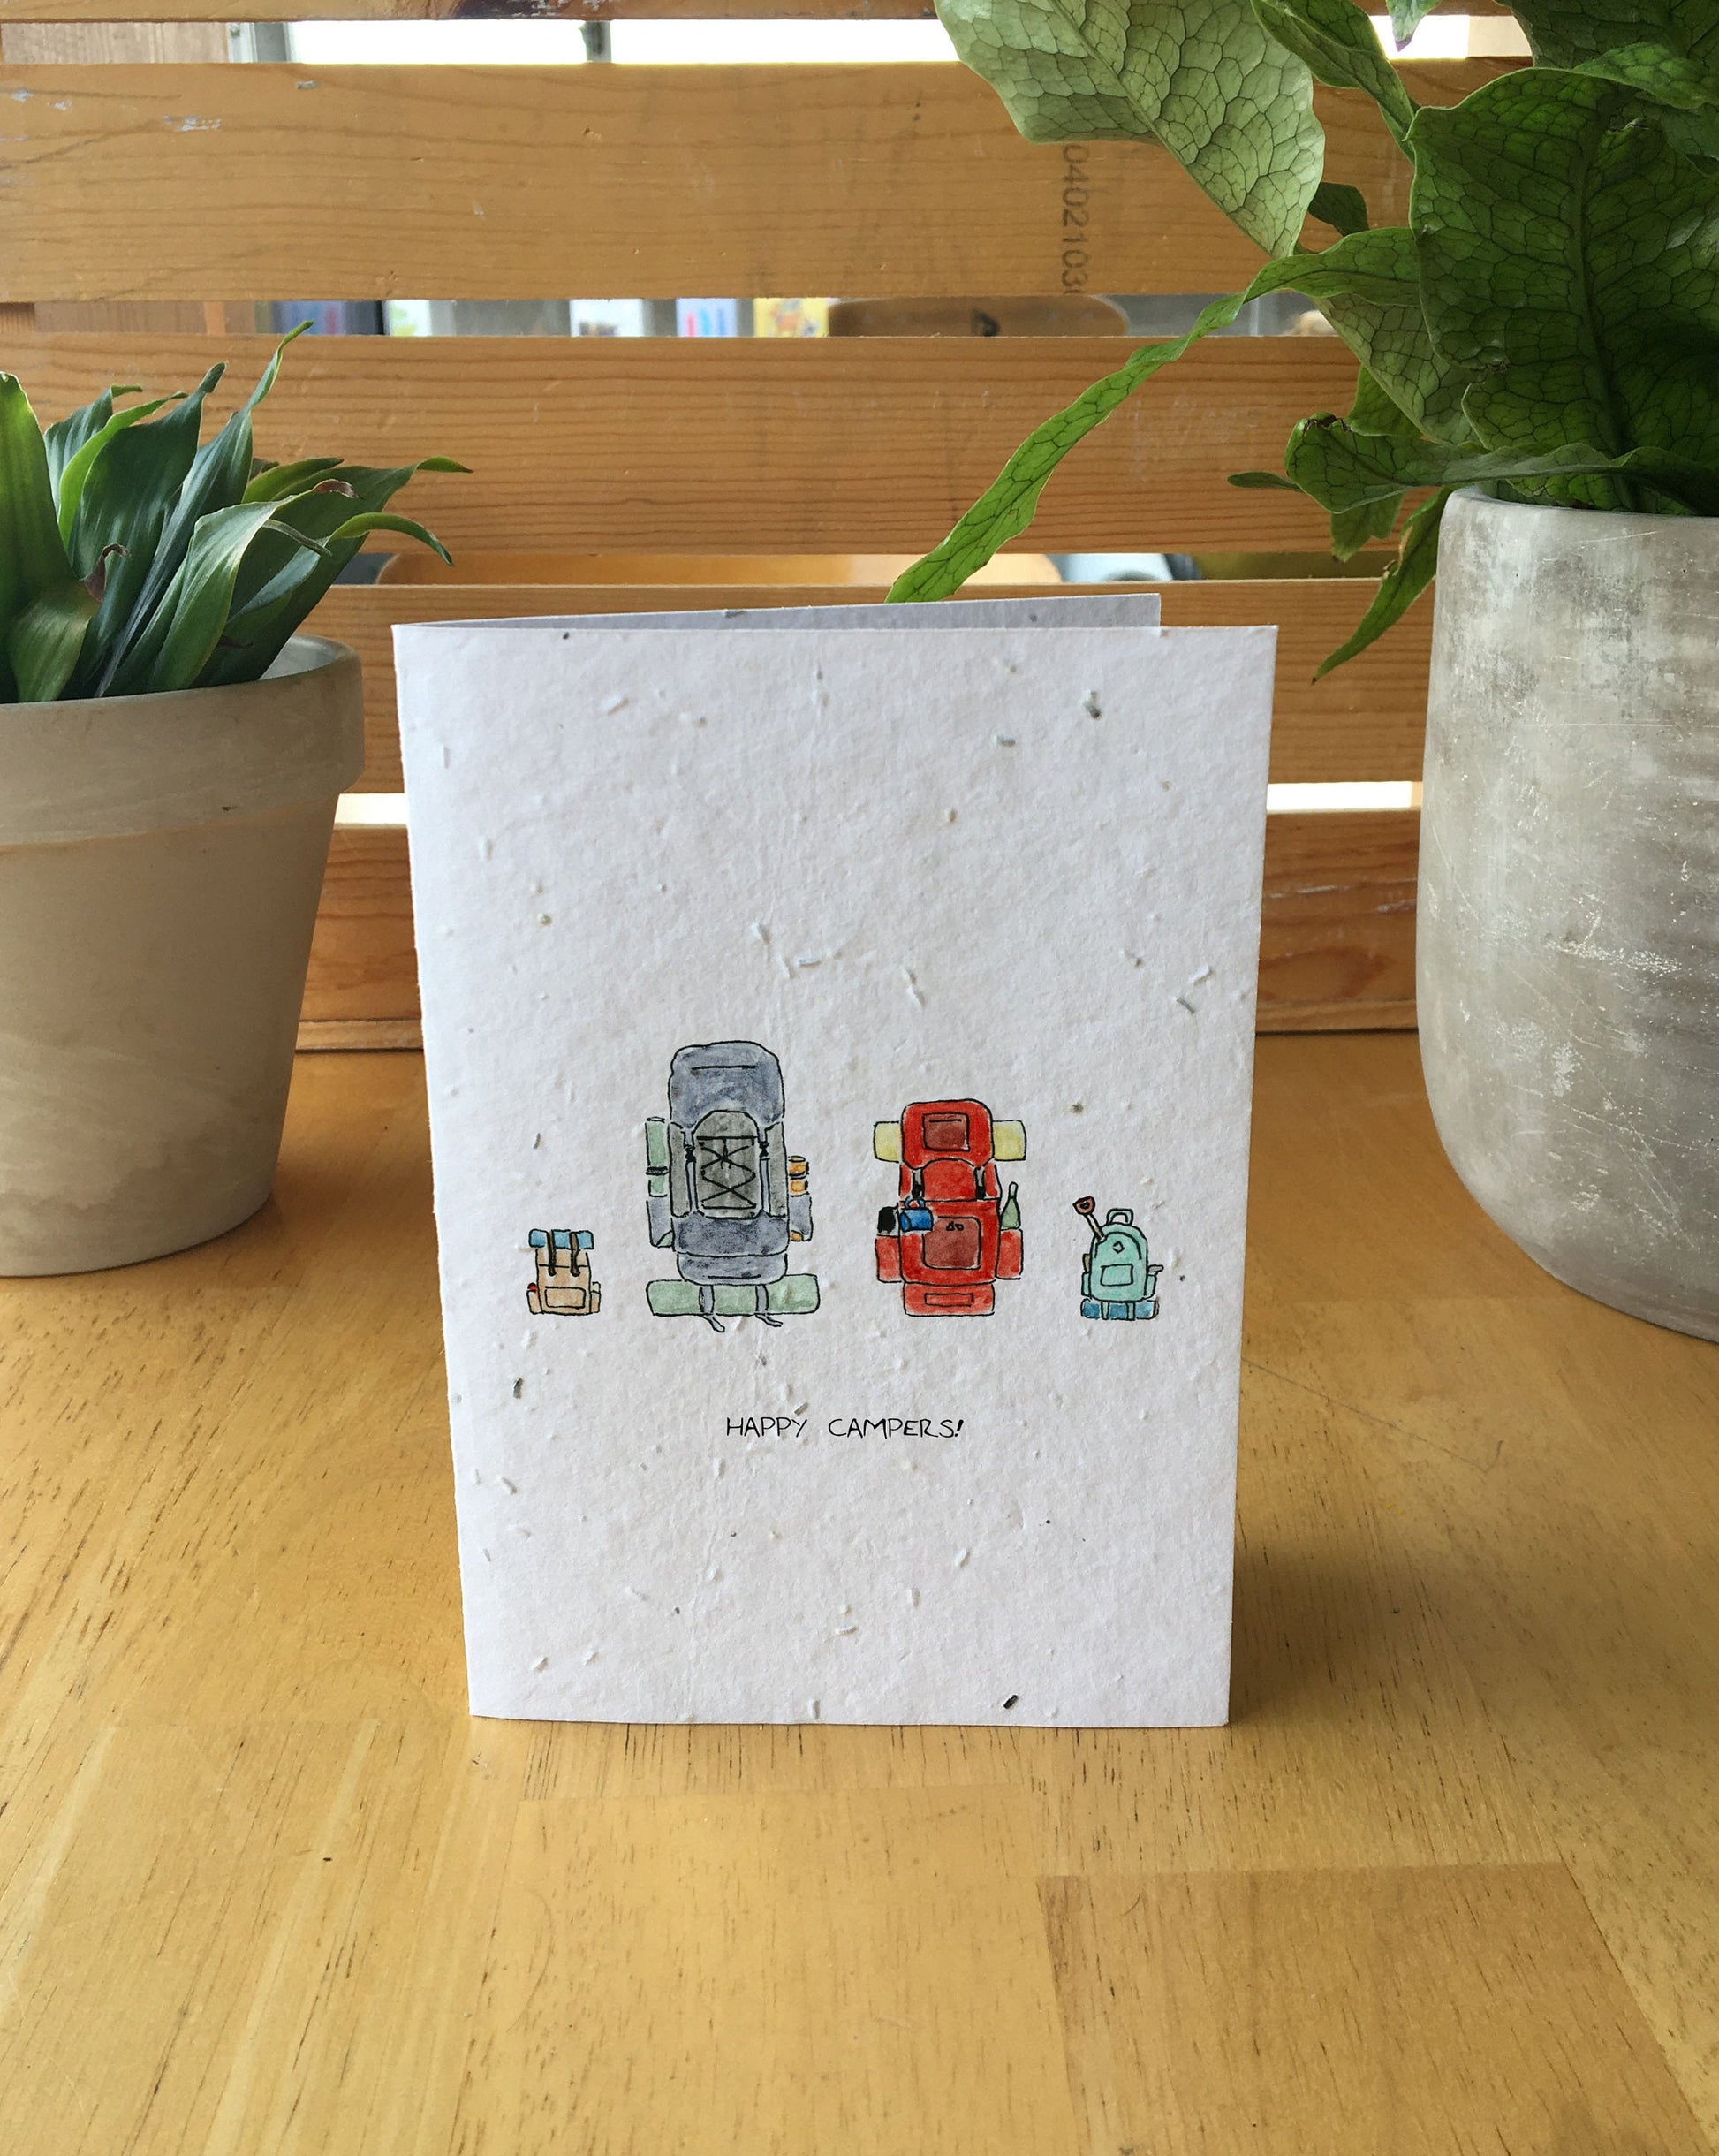 Handmade Birthday Cards